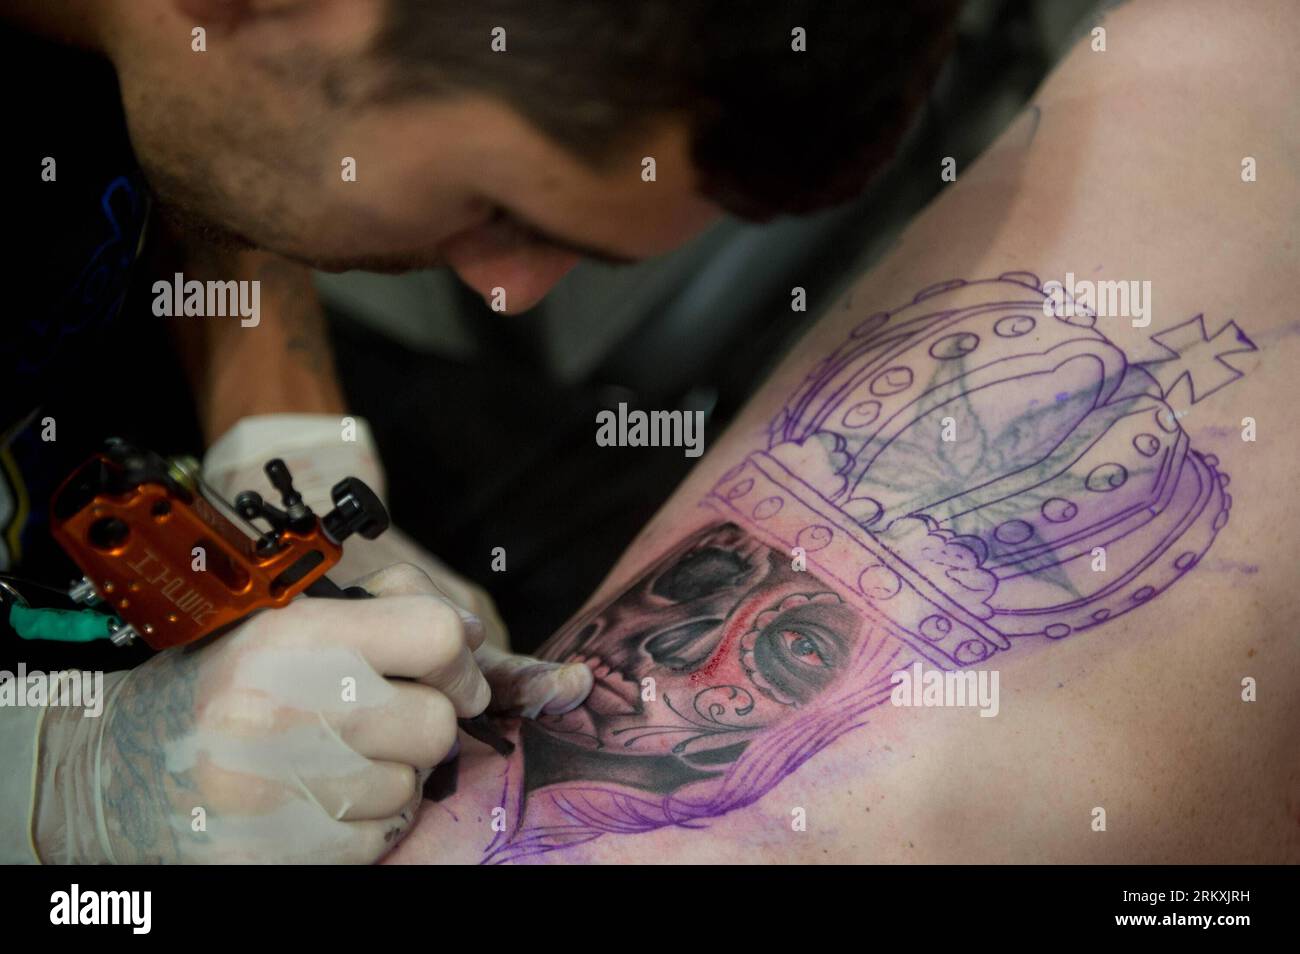 Tattoos Art - Tattoos Art is at RK Tattoo Studio. | Facebook